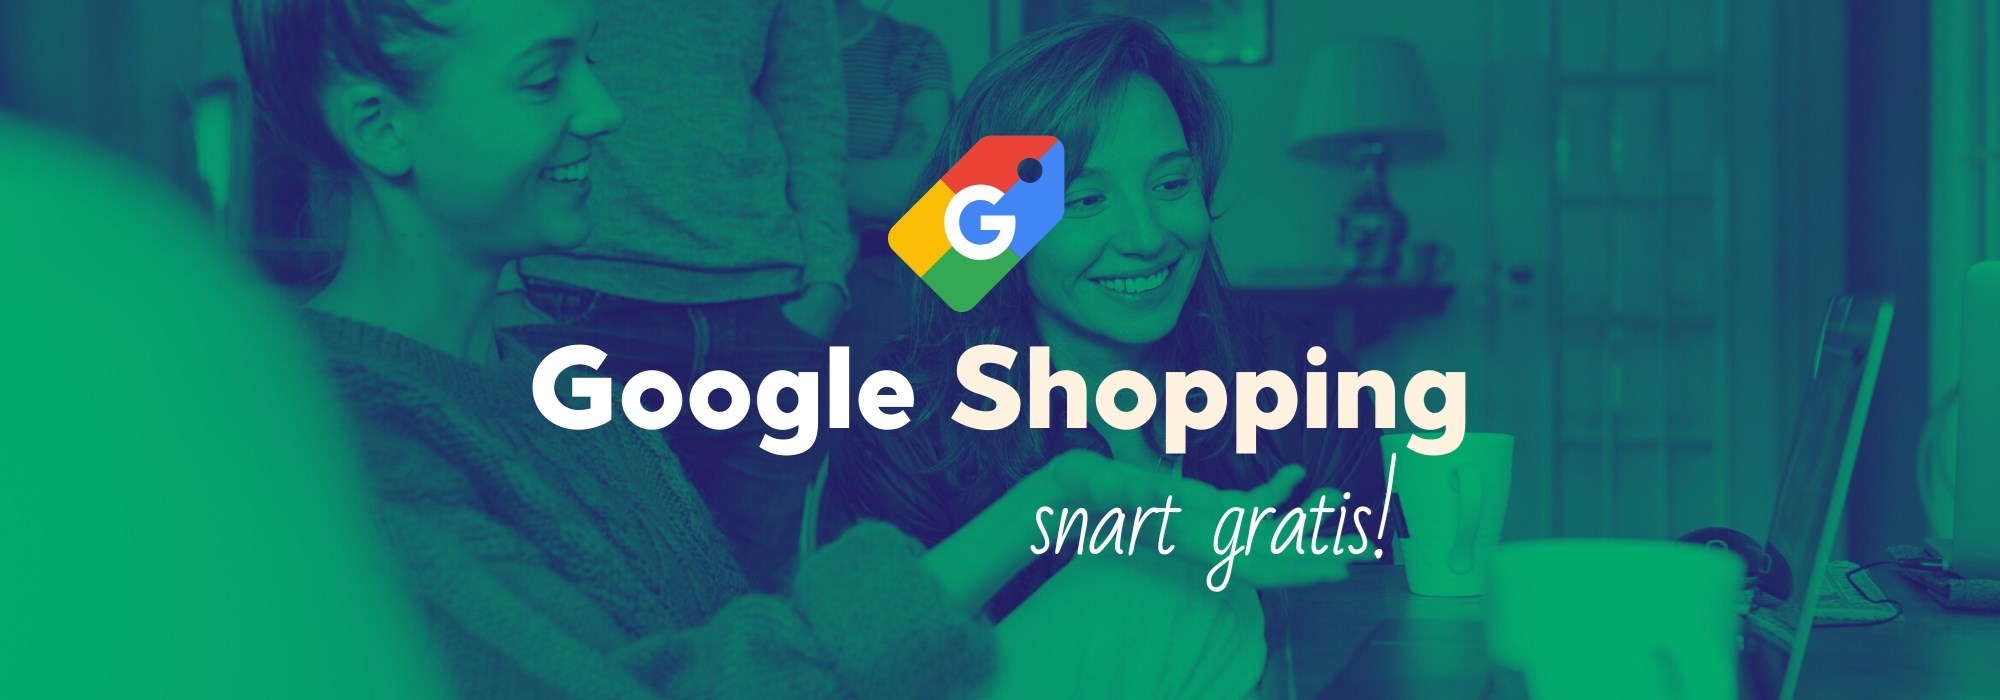 Nu kan du snart synas gratis på Google Shopping